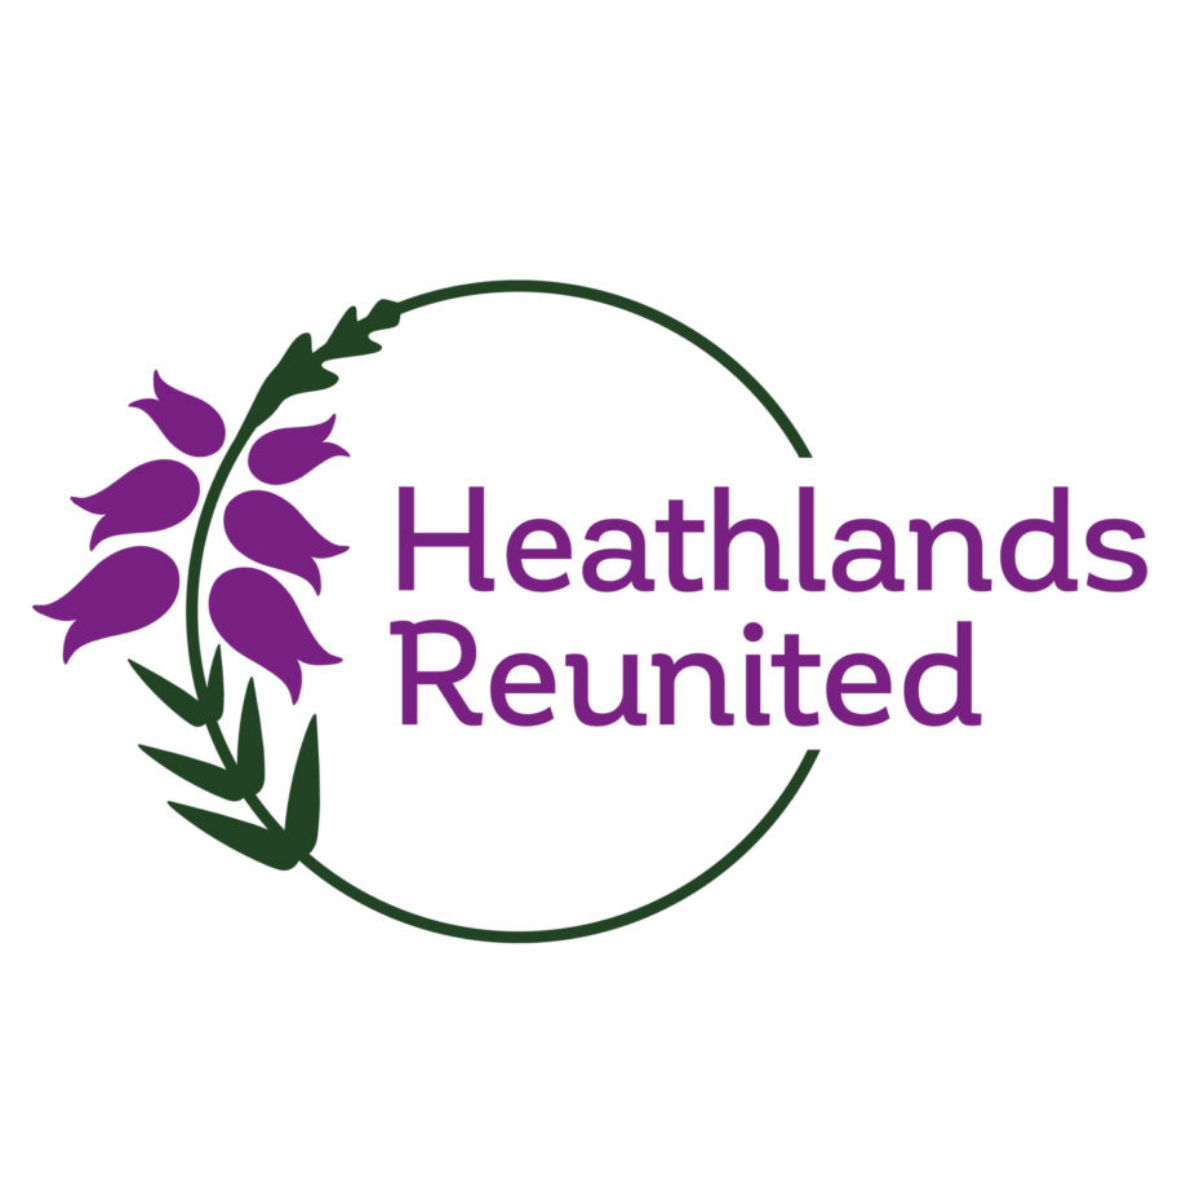 Heathlands Reunited logo